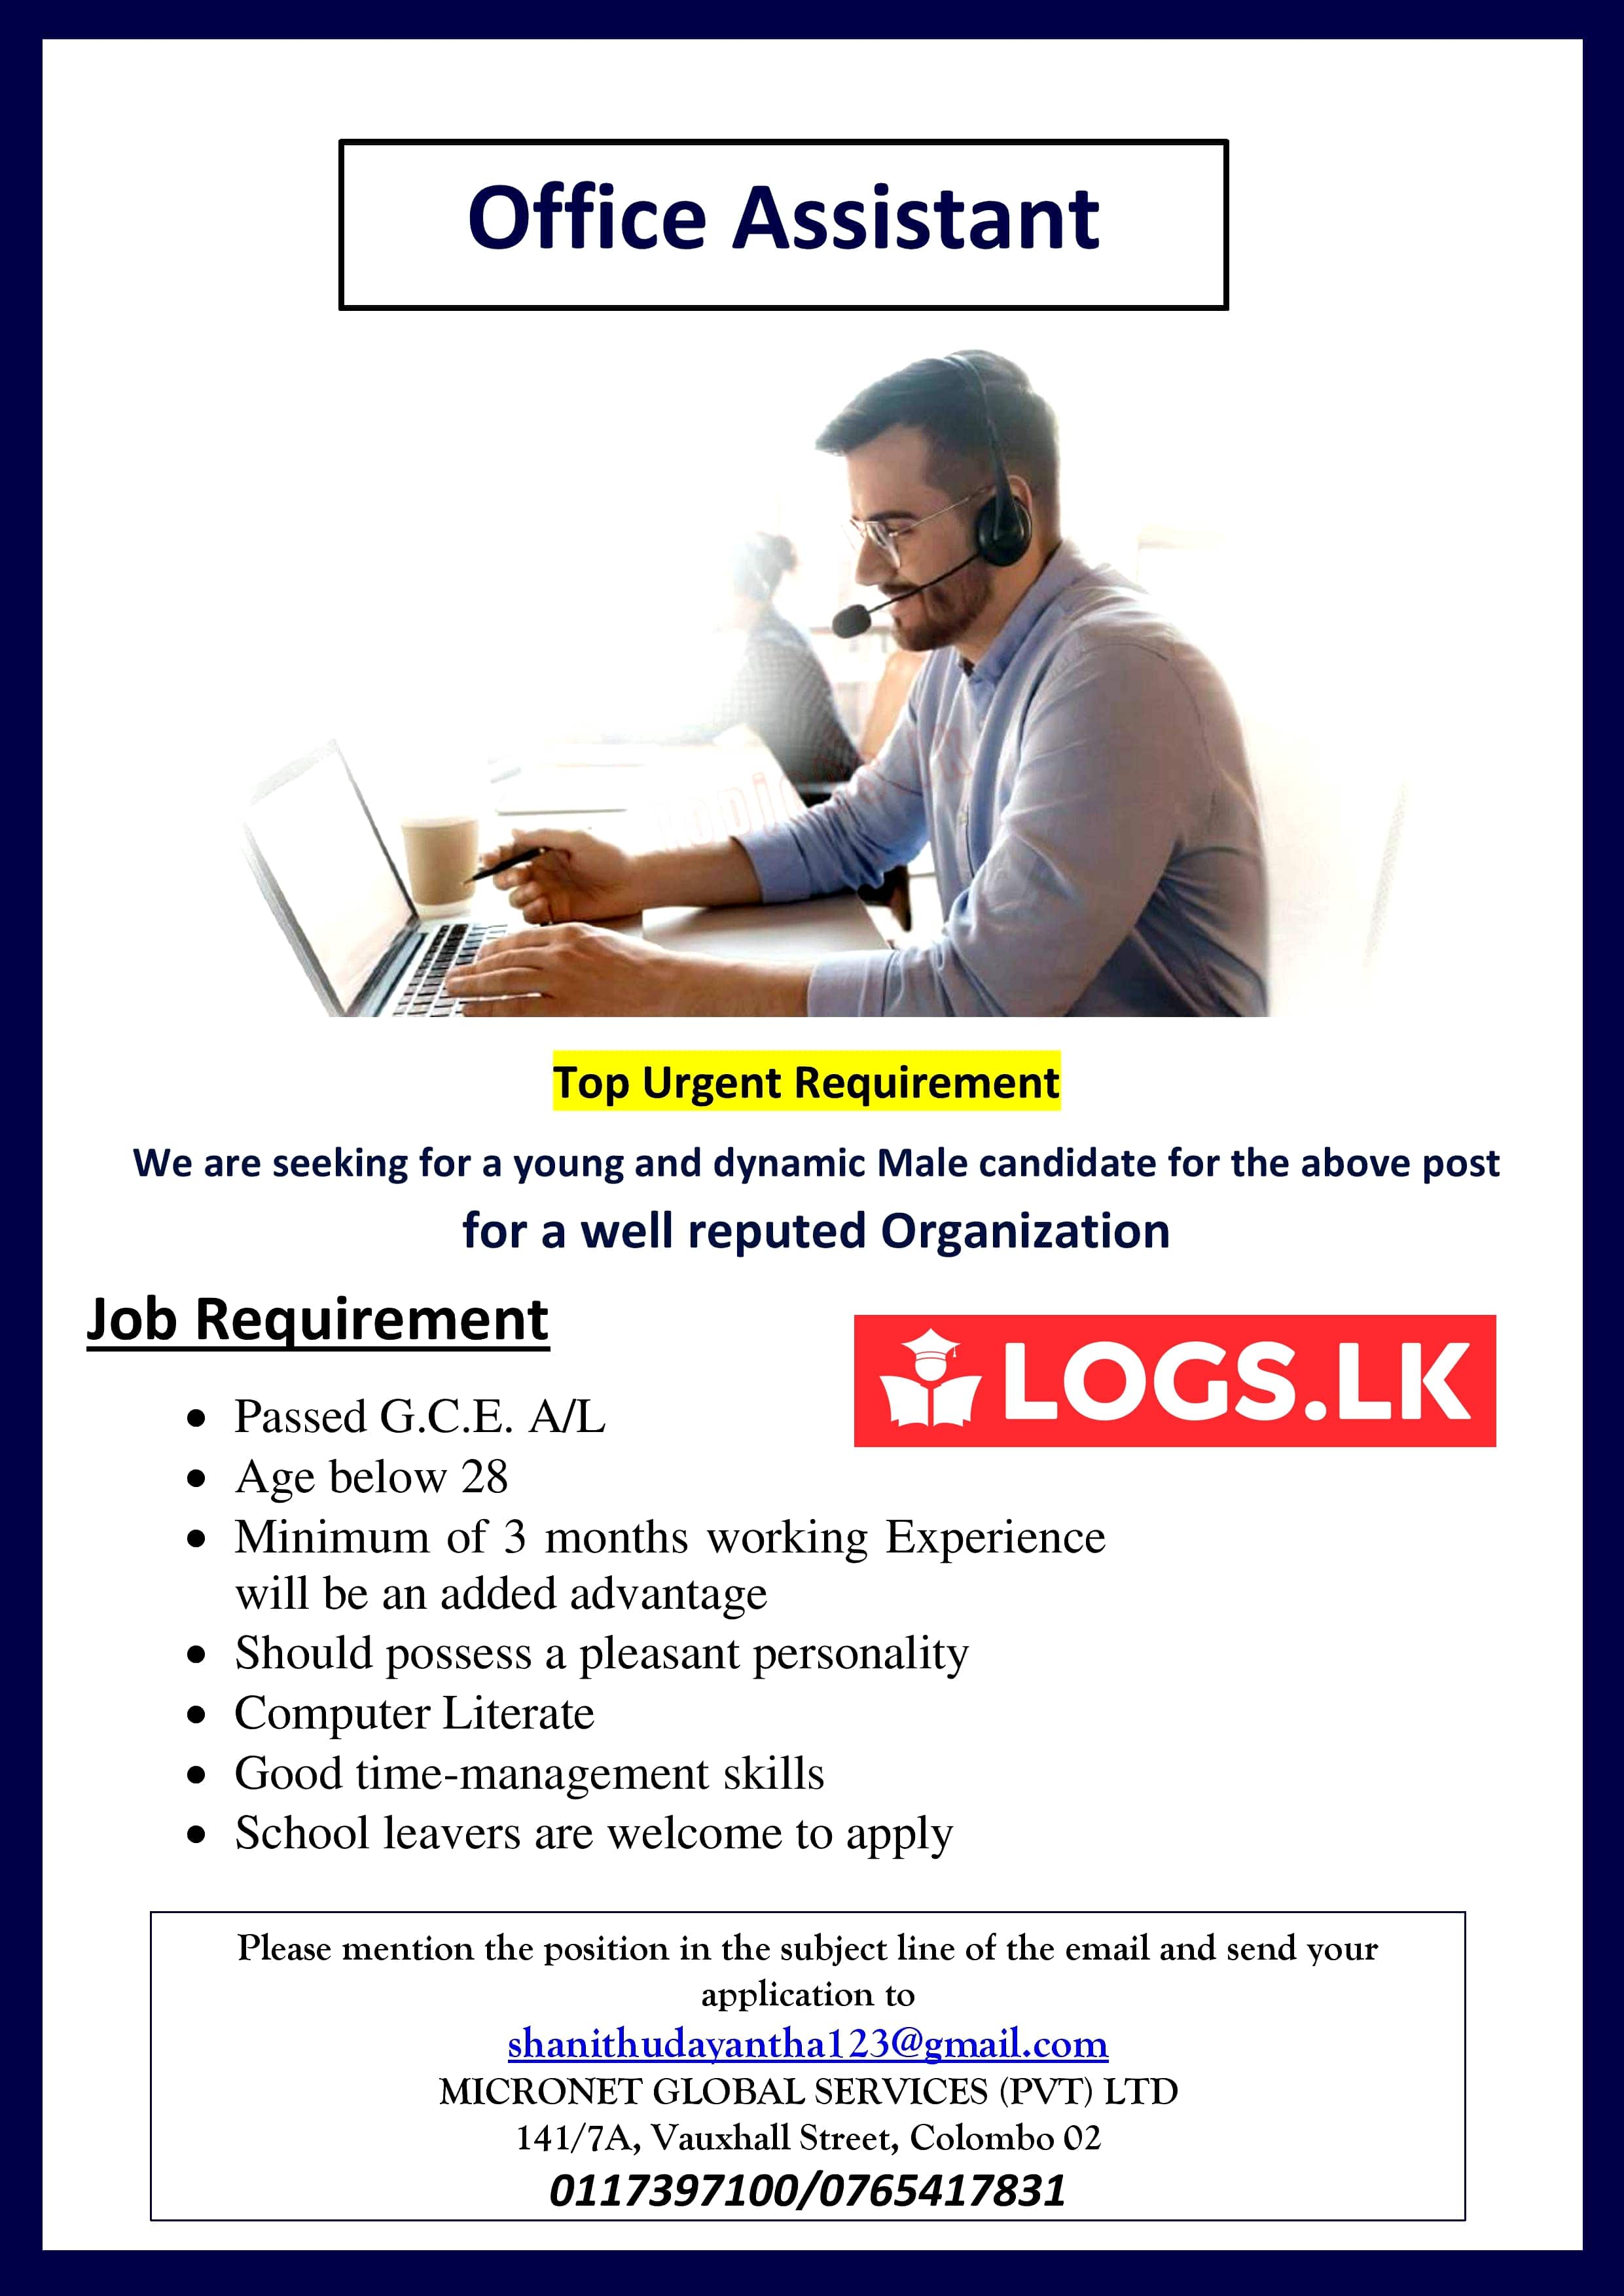 Office Assistant Job Vacancy - Micronet Global Services Jobs Vacancies